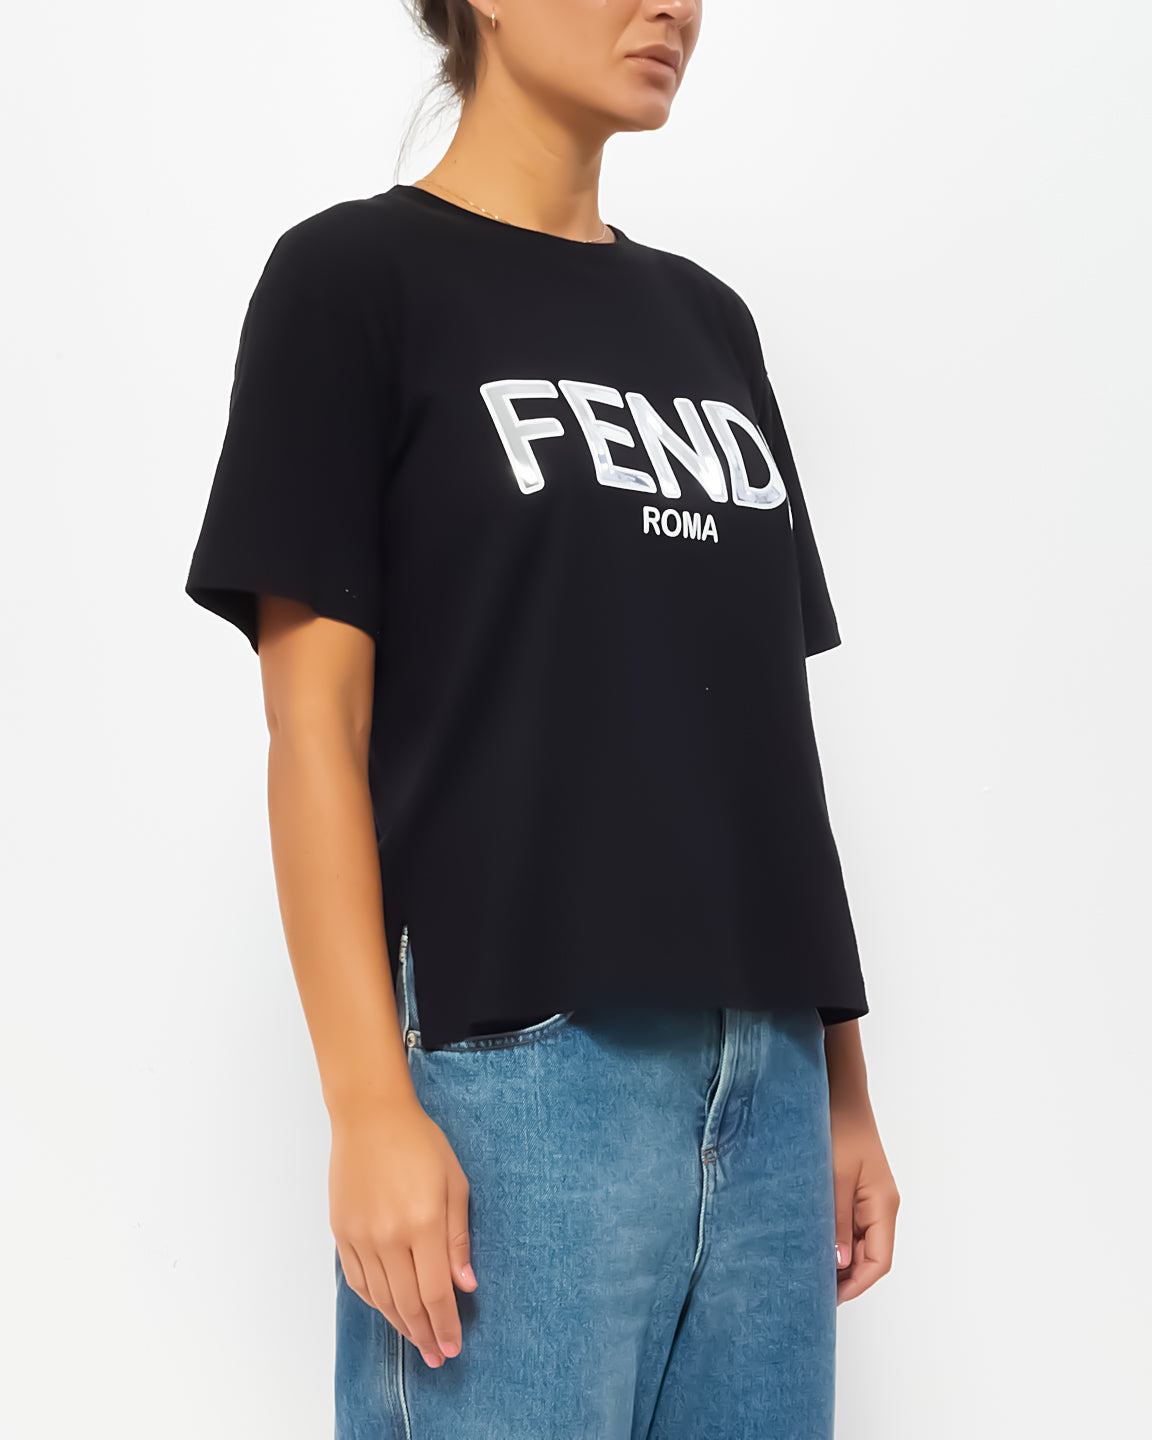 Fendi Black Logo T Shirt - XS